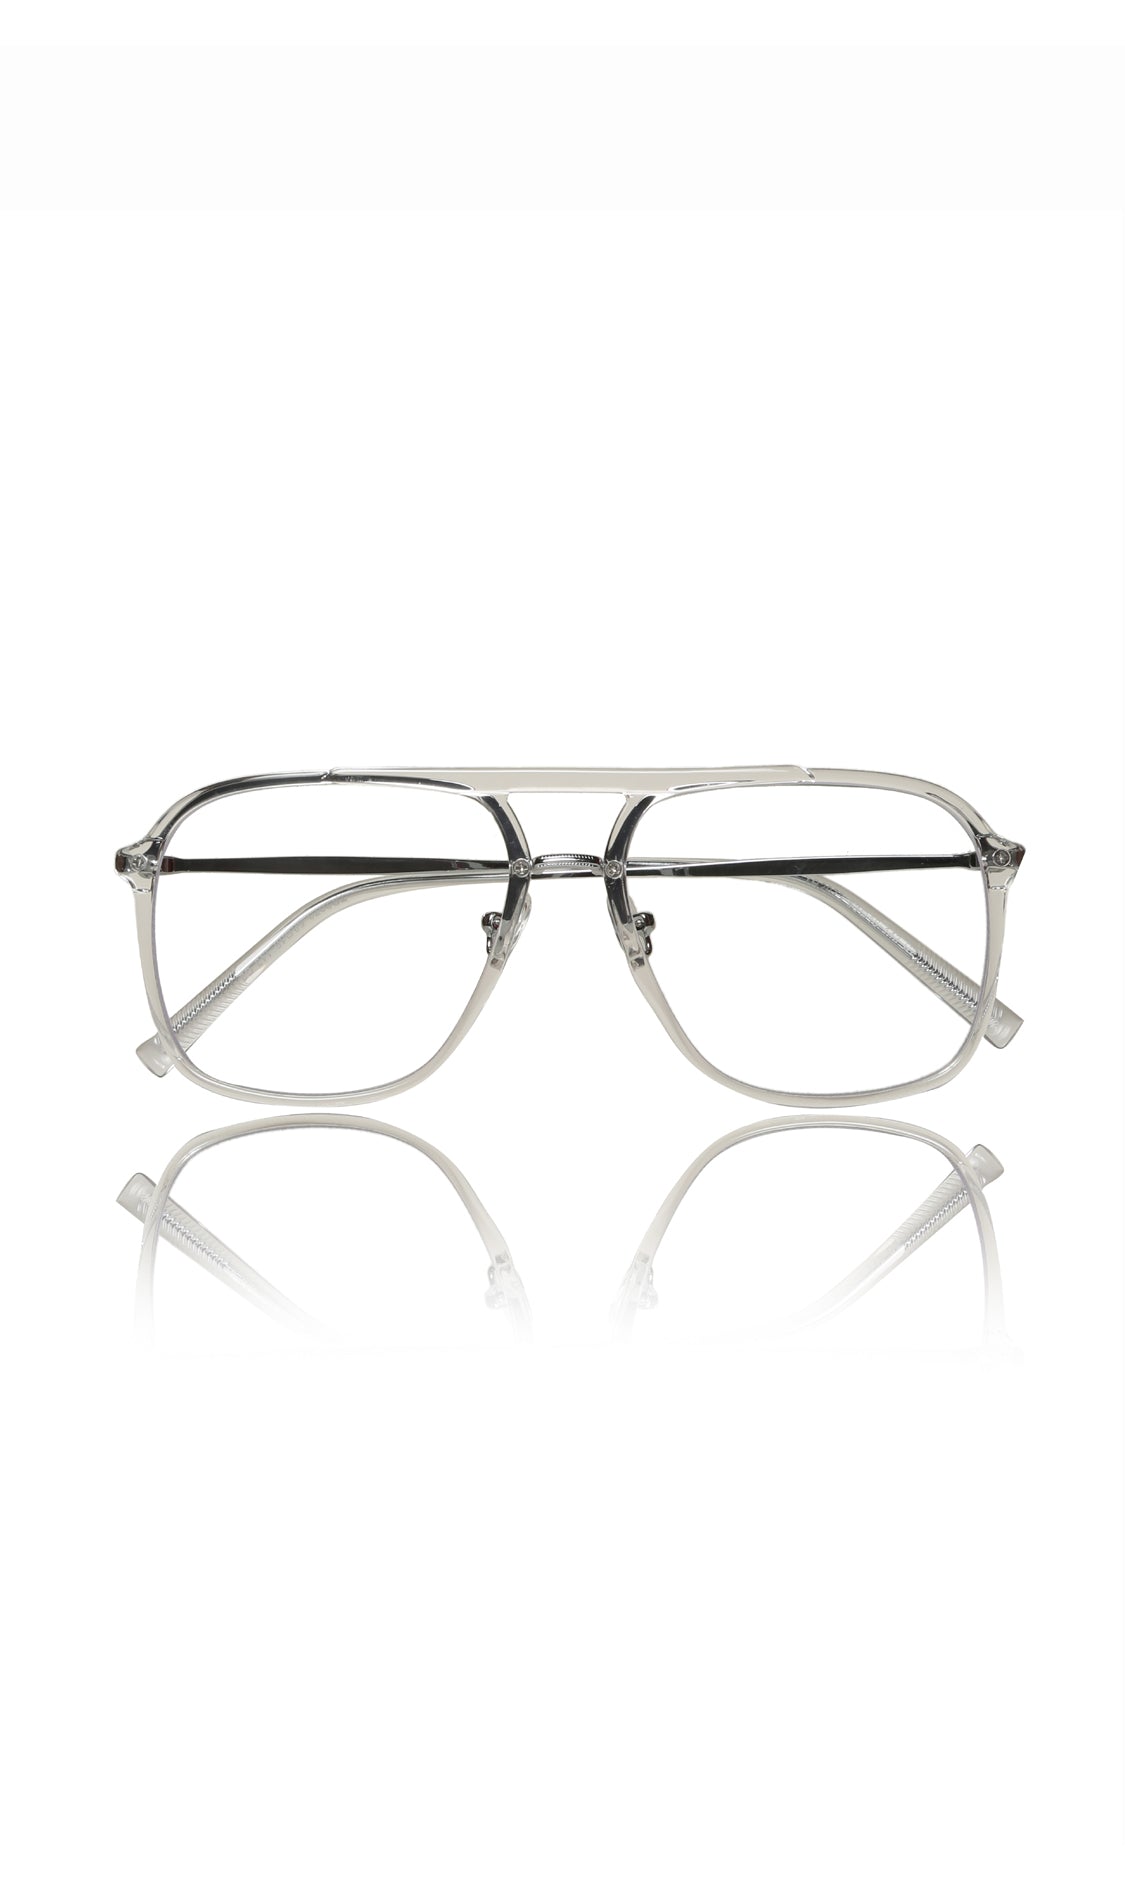 Jodykoes® Premium Series Double Bar Eyewear Eyeglasses Spectacles Frame for Men and Women (Transparent) - Jodykoes ®